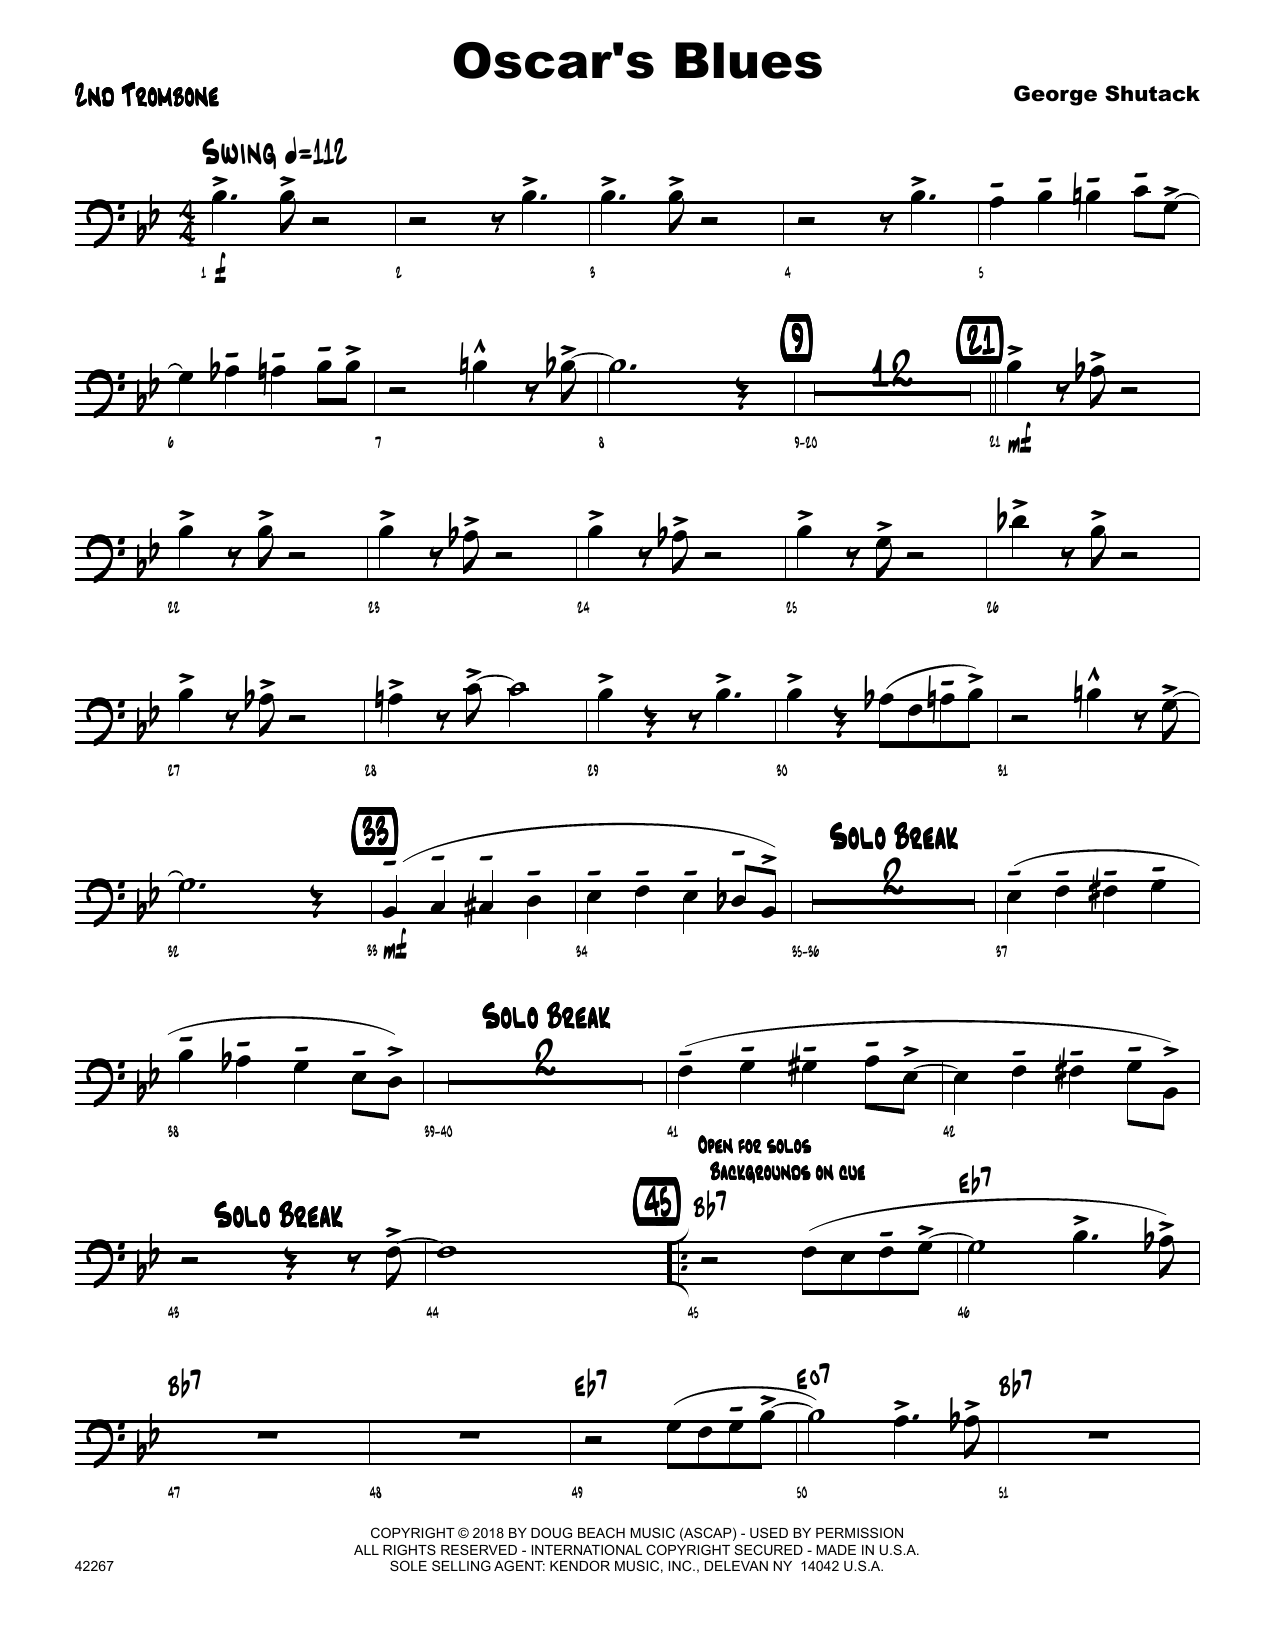 Download George Shutack Oscar's Blues - 2nd Trombone Sheet Music